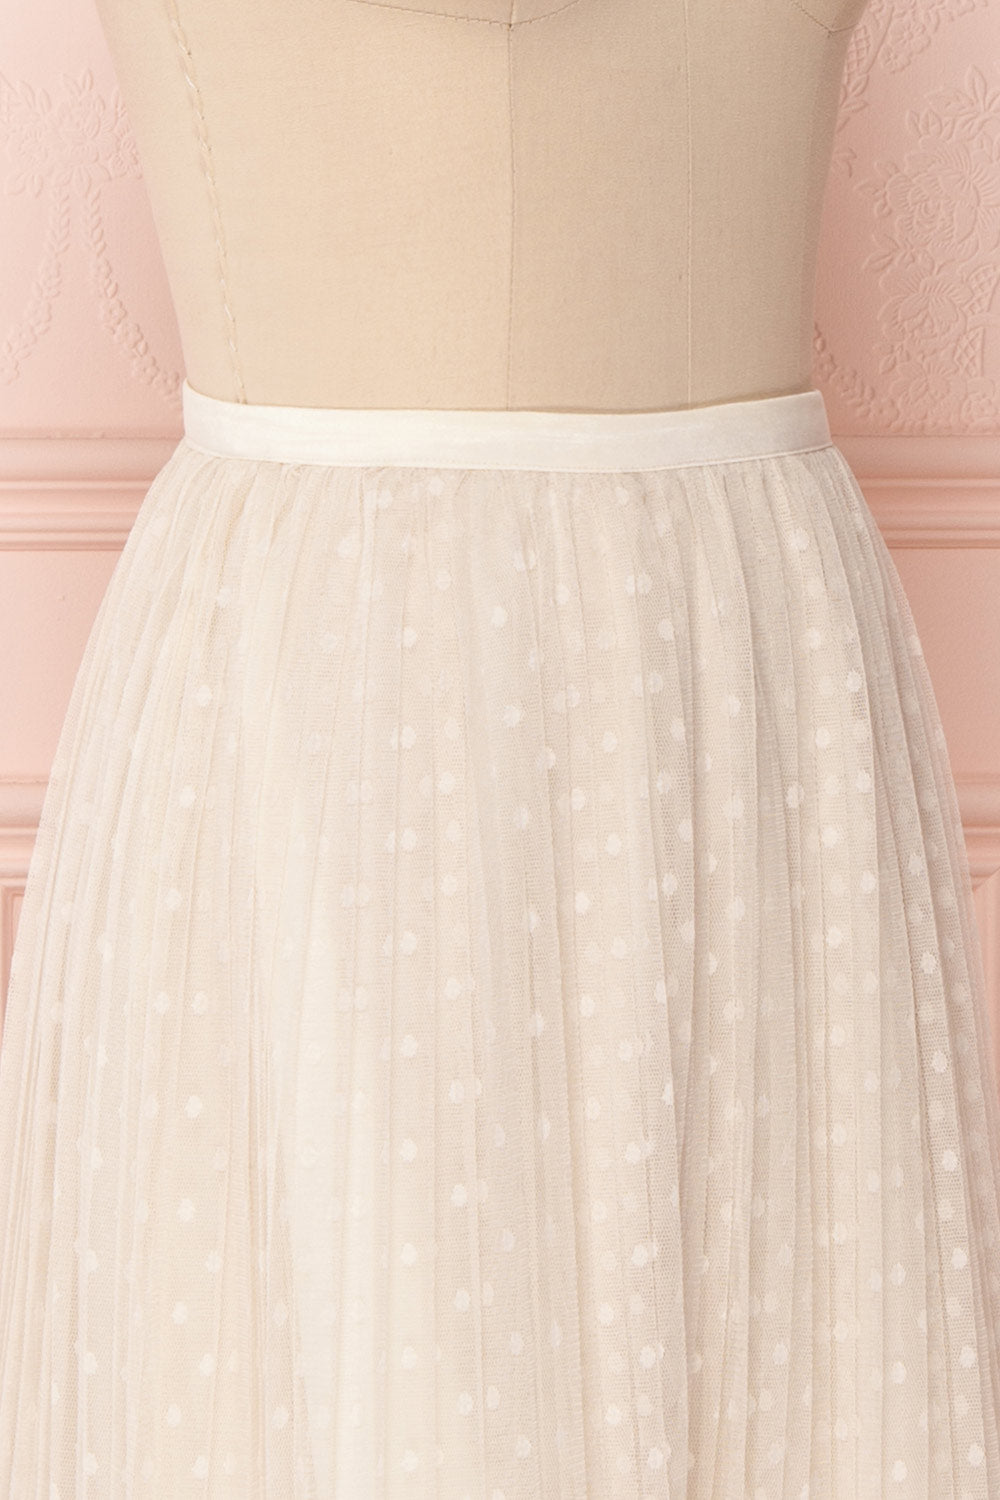 Mihiroa Cream Pleated Mesh Polka Dot Skirt | Boutique 1861 5